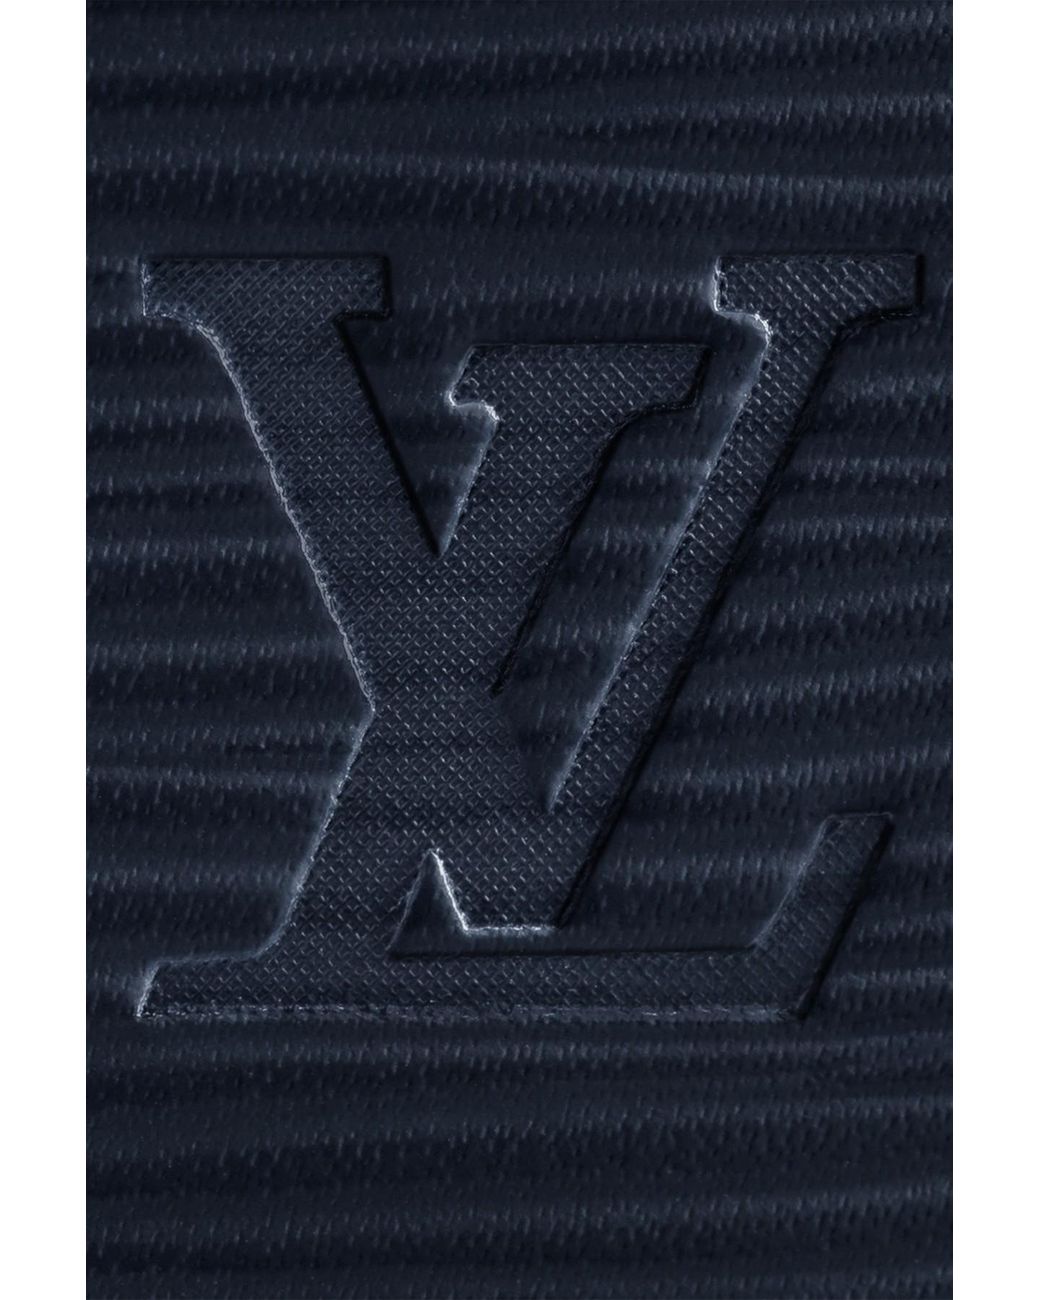 Louis Vuitton LV Danube slim pm new Multiple colors Leather ref